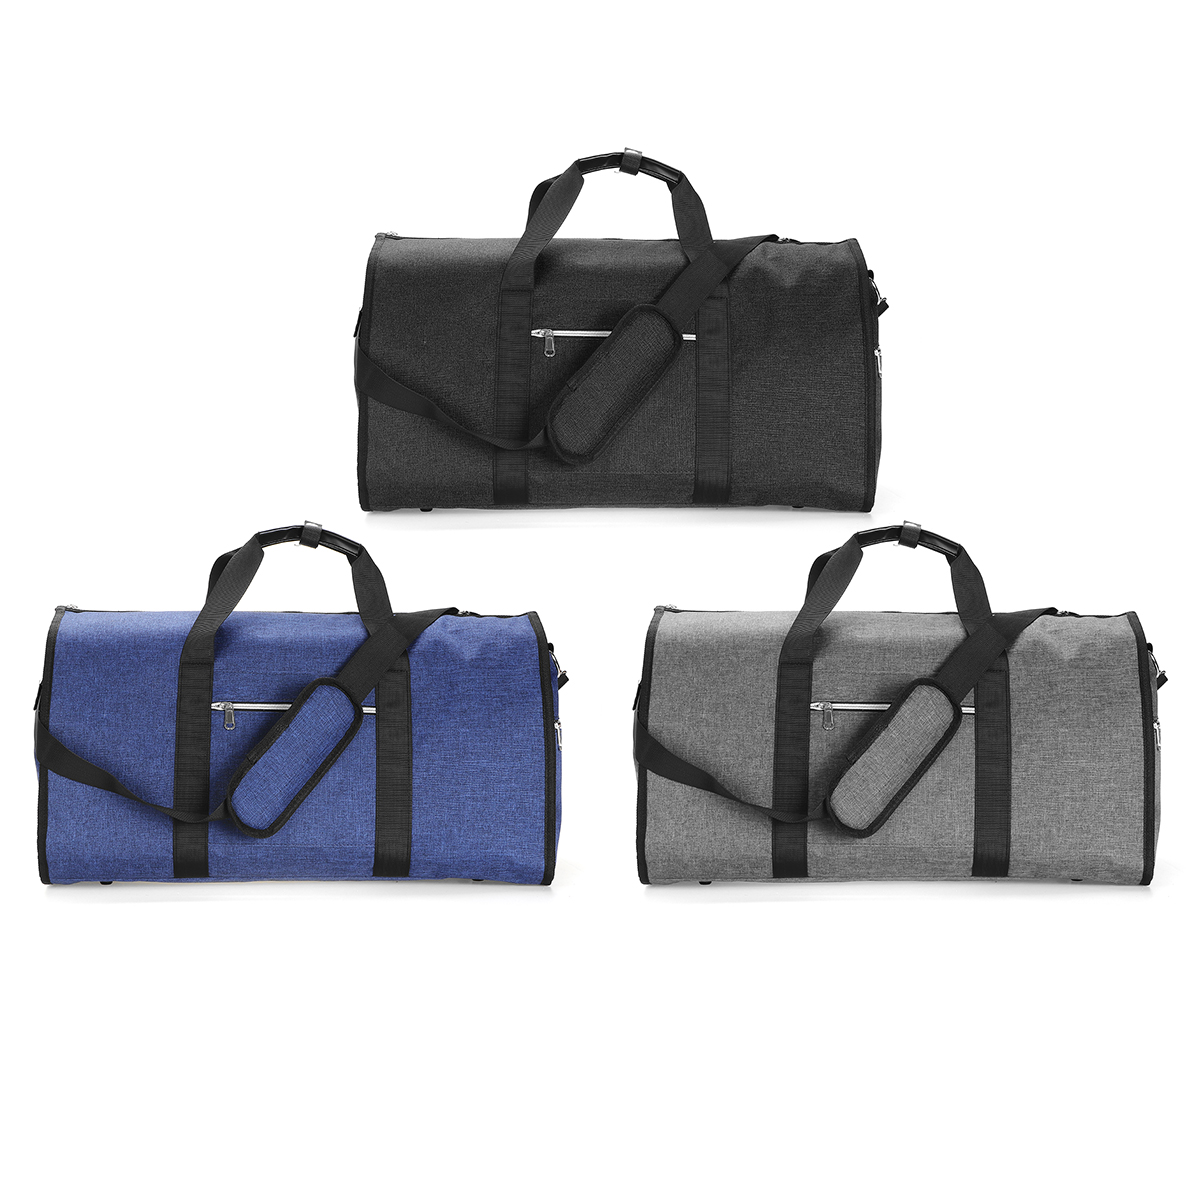 47L-Outdoor-Portable-Travel-Luggage-Bag-Suit-Dress-Garment-Storage-Handbag-Sports-Gym-Bag-1553950-1